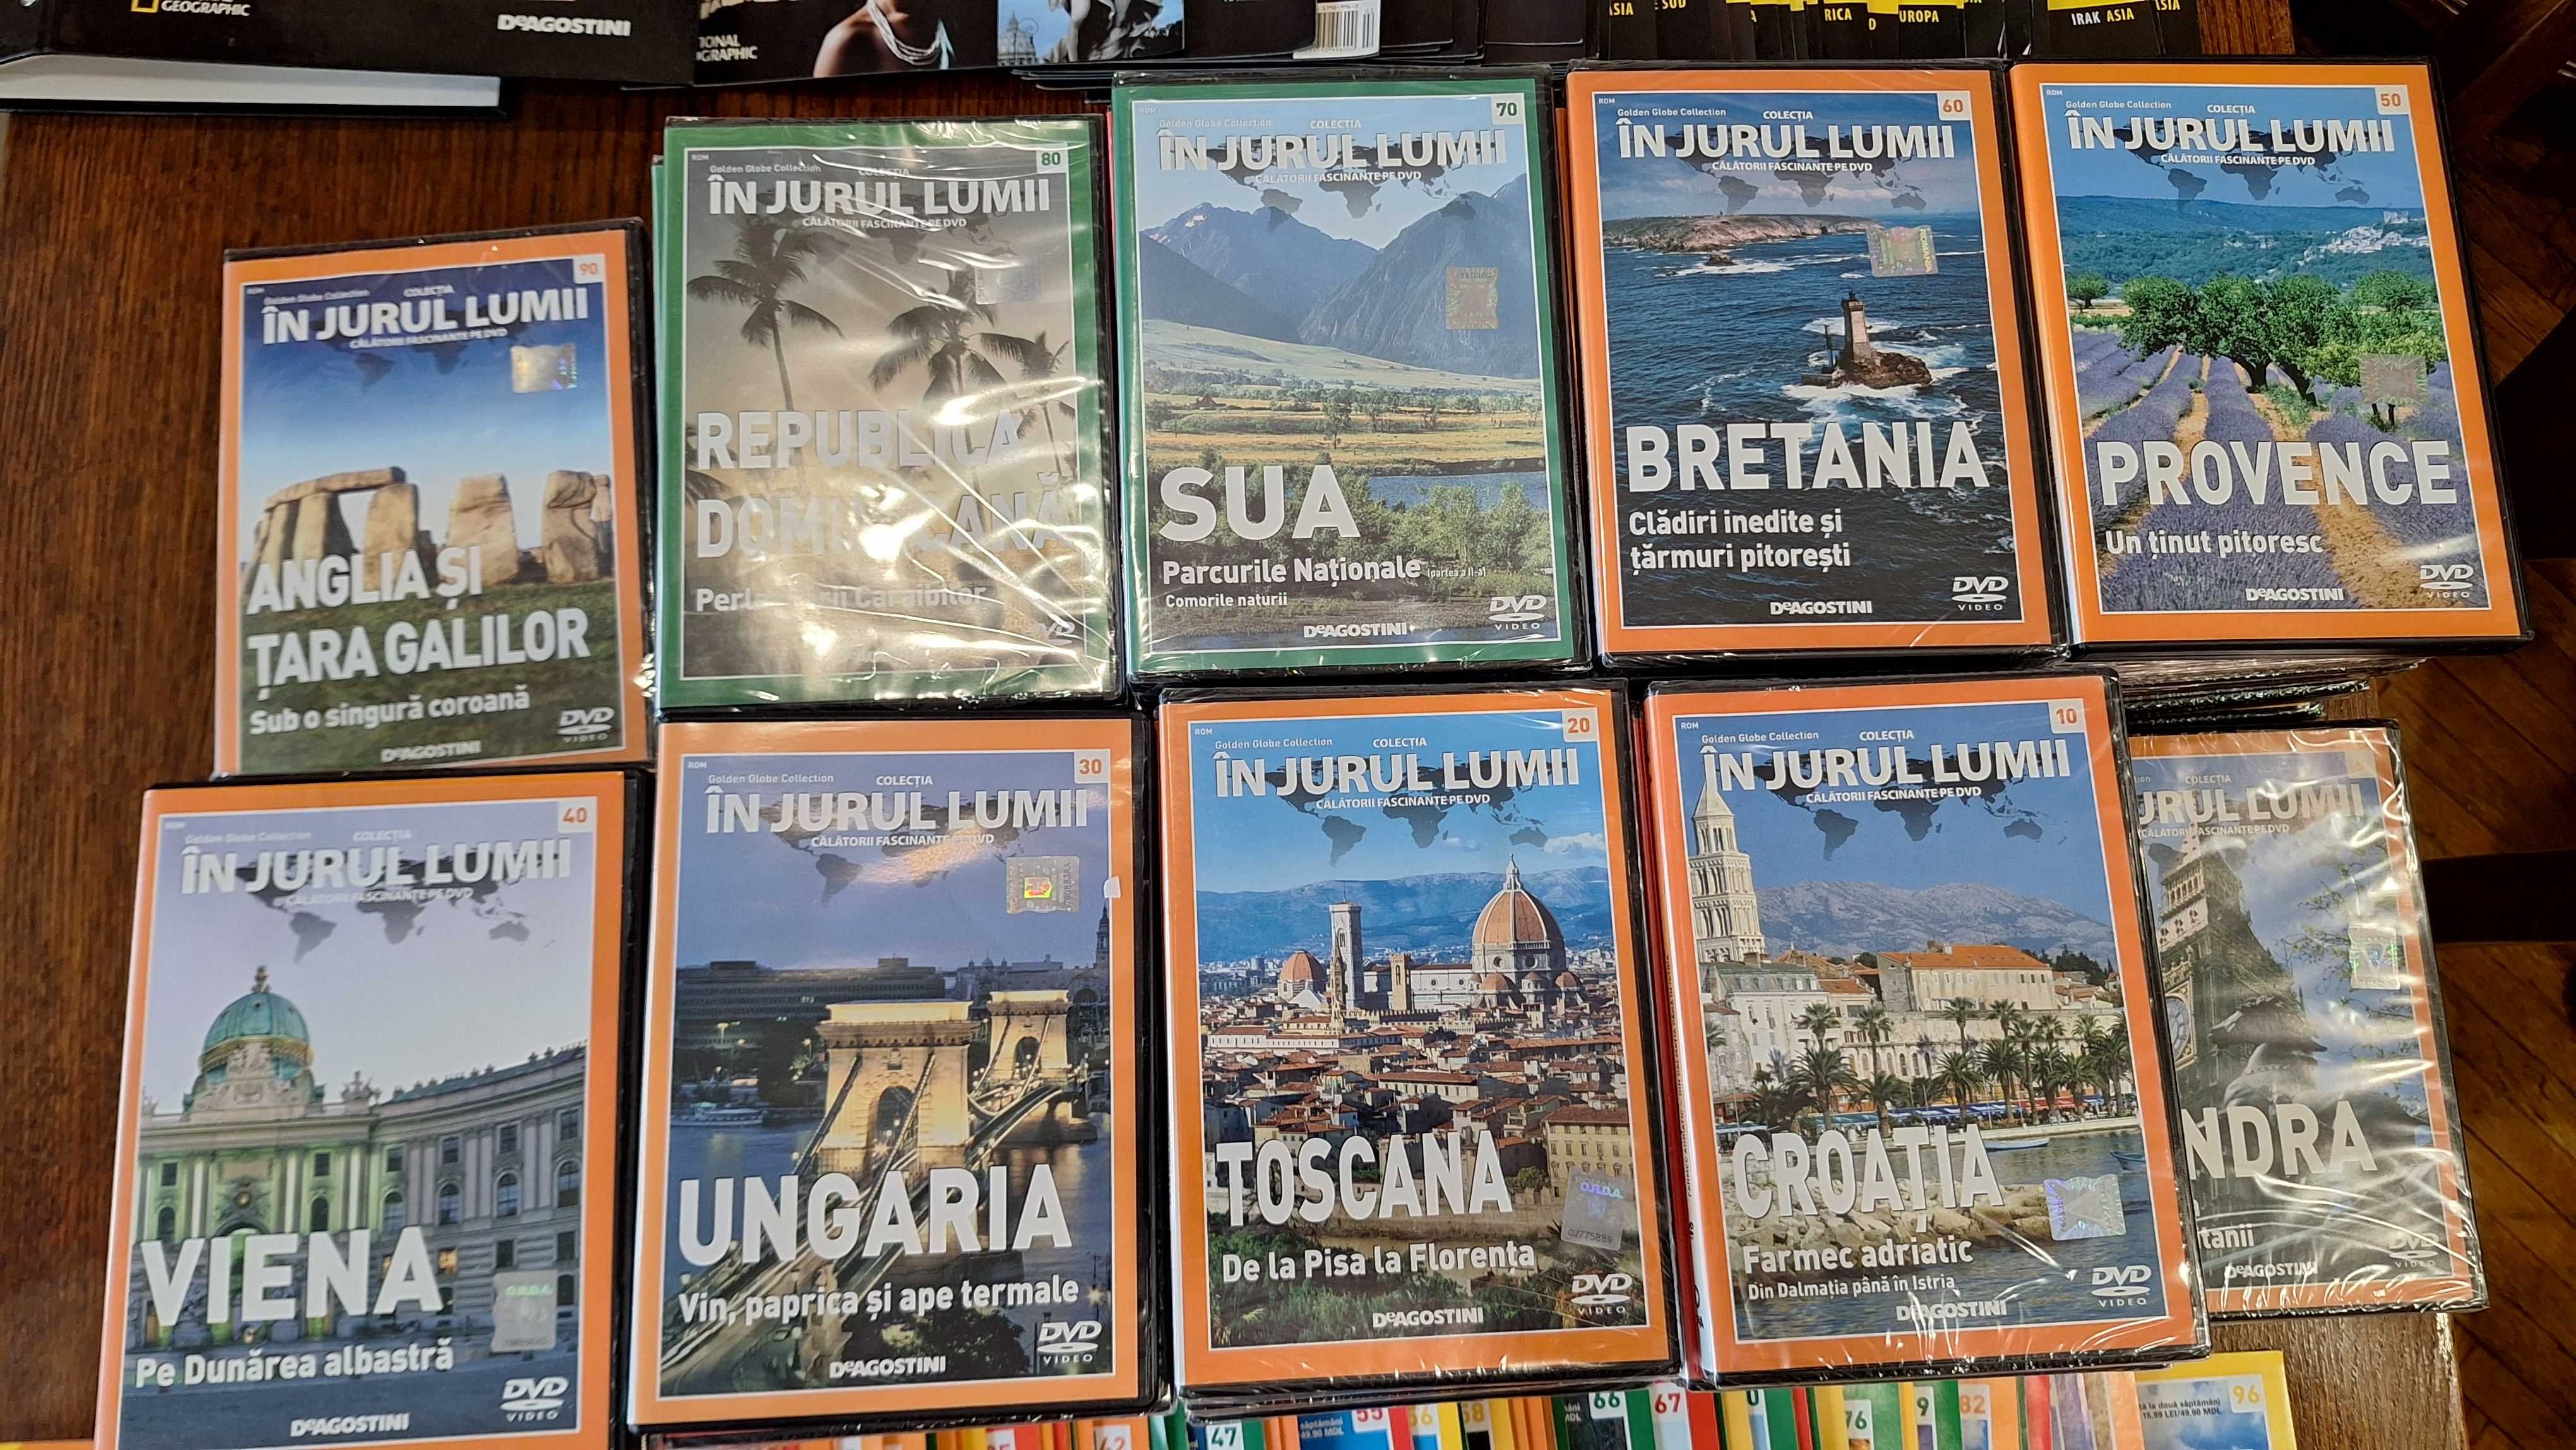 Colectie De Agostini si National geografic 134 dvd-uri si 134 reviste